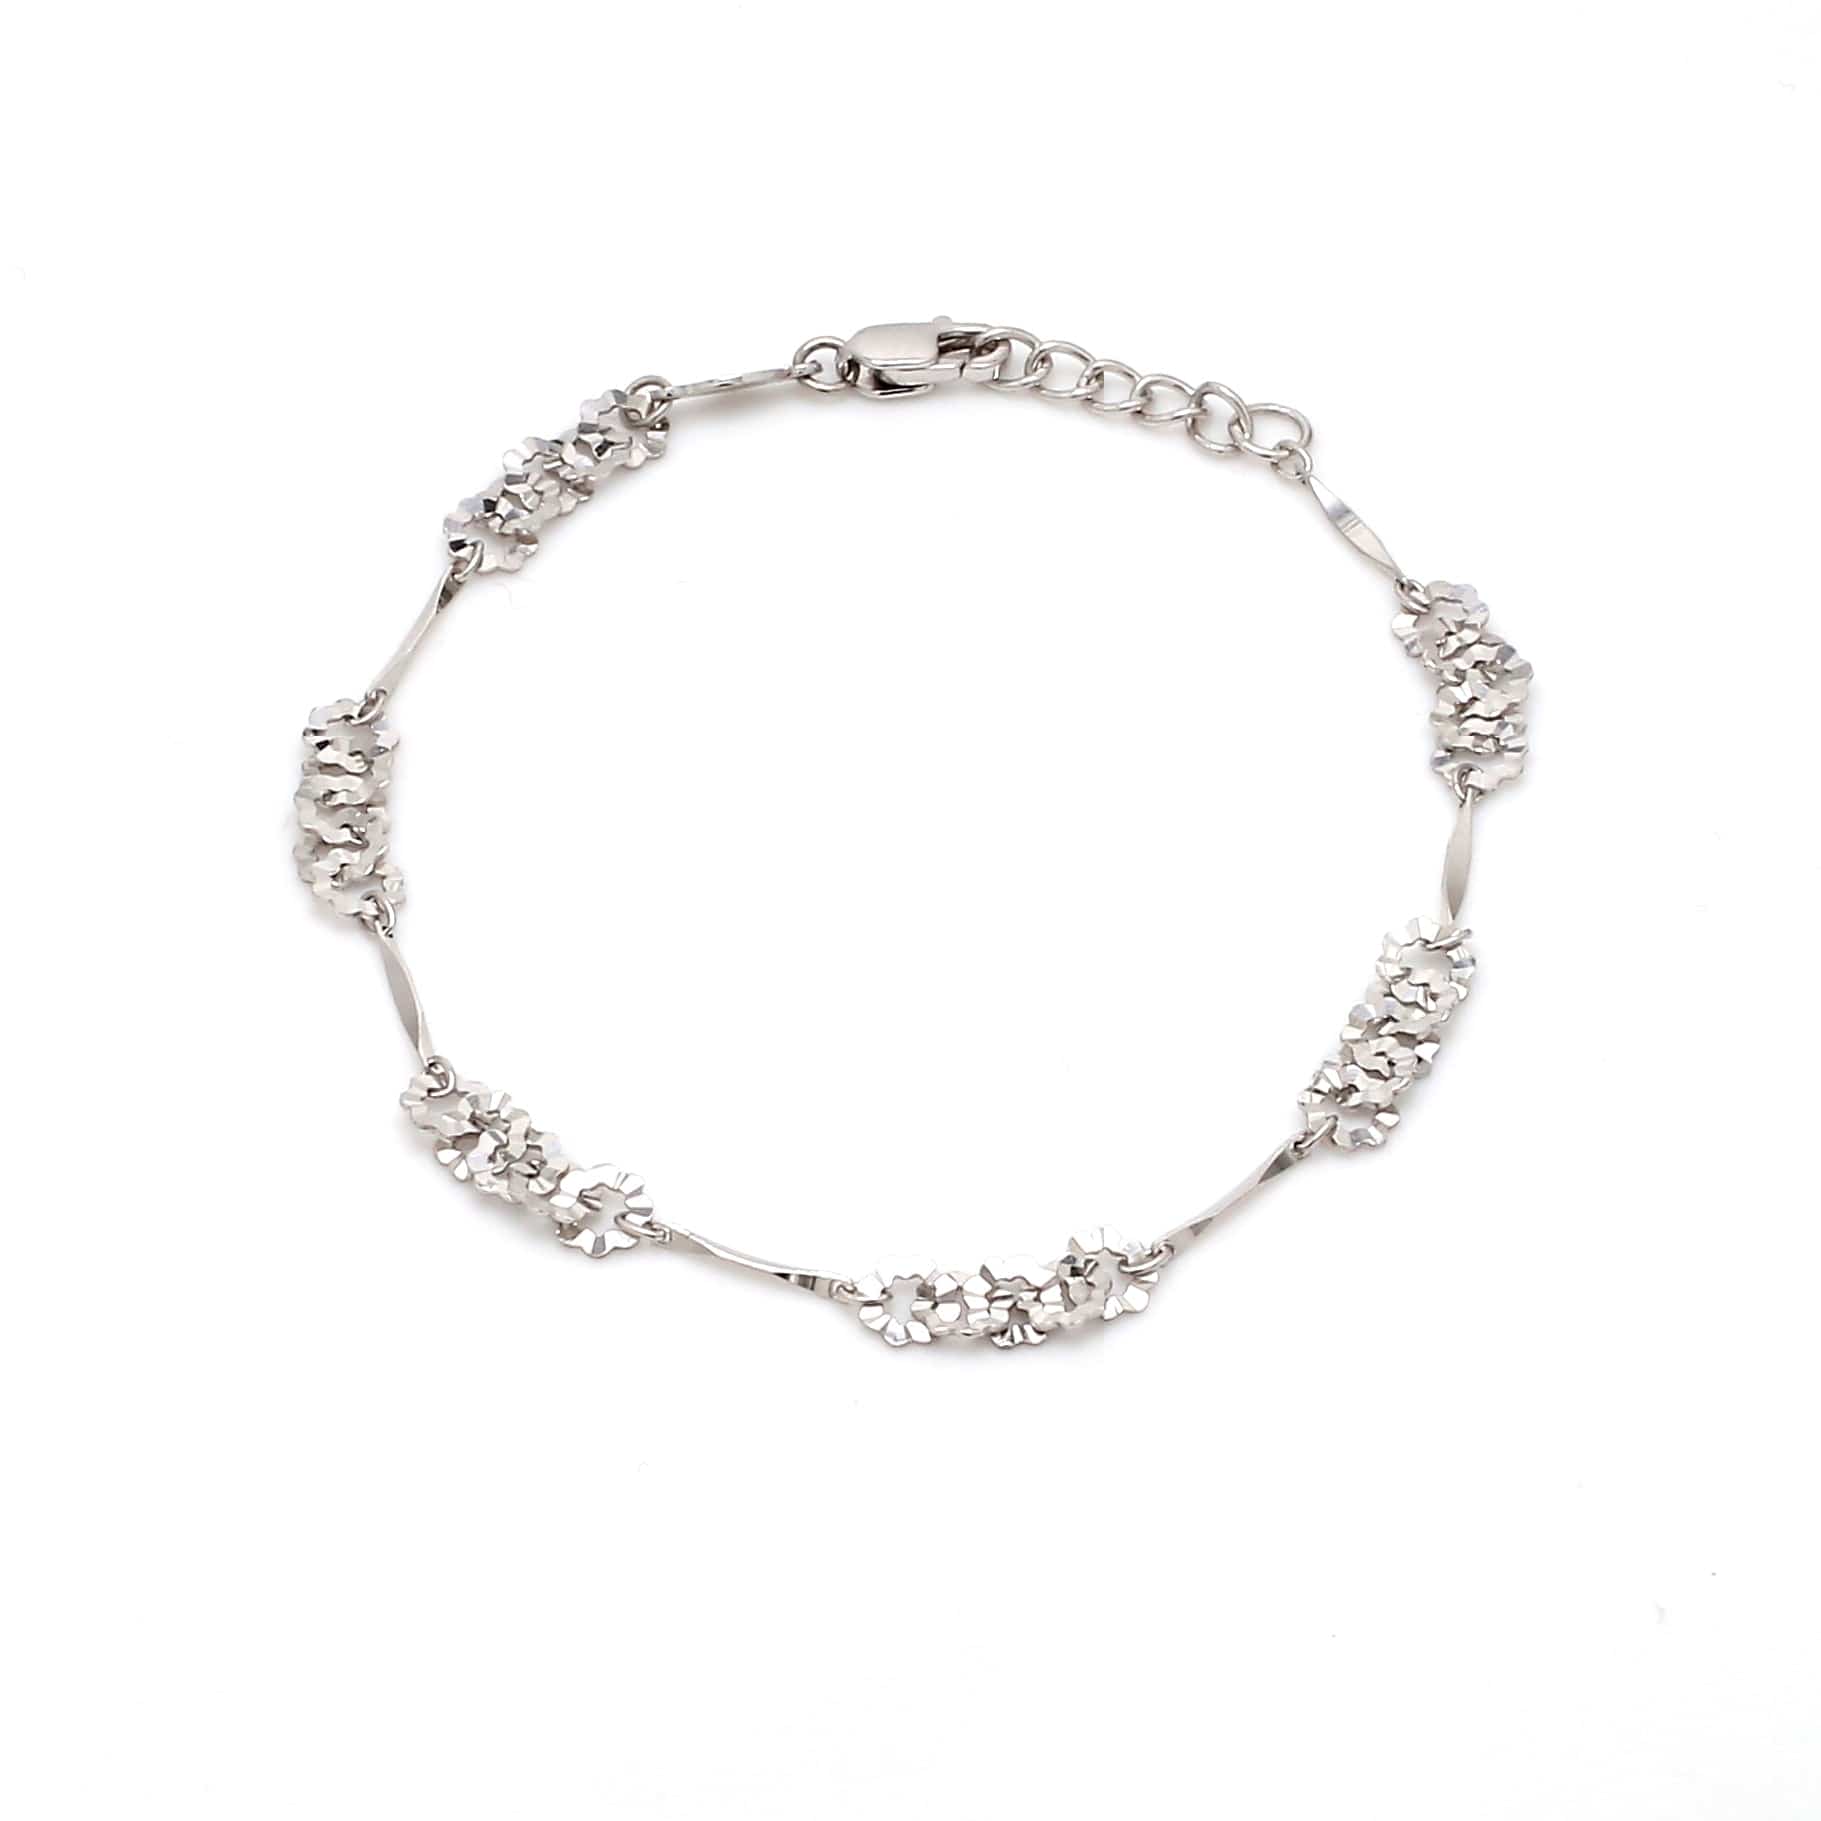 Buy quality 925 sterling silver fancy kada bracelet for ladies in Ahmedabad